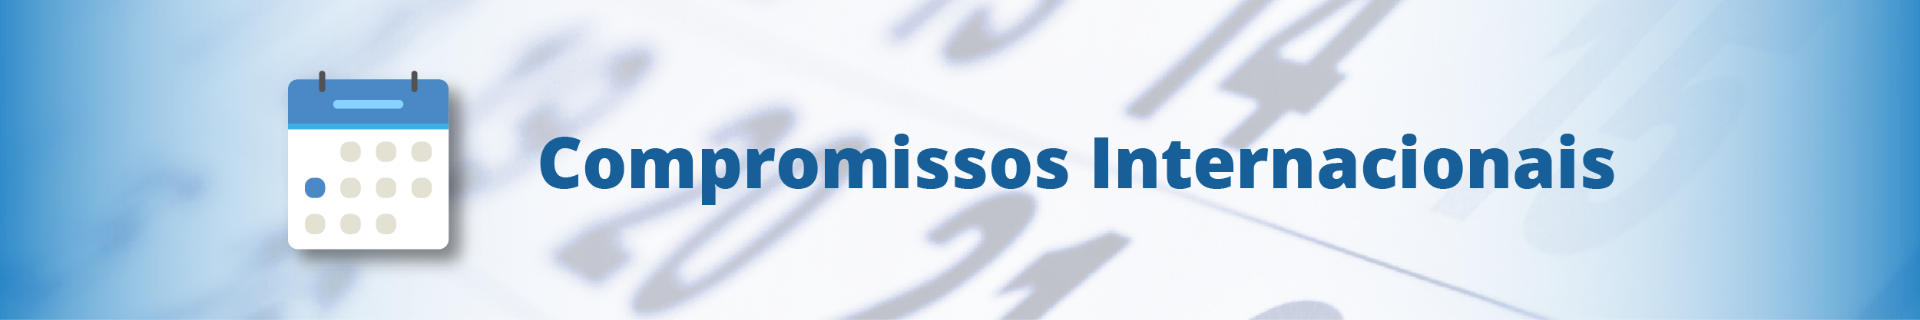 banner portal_compromissos internacionais-02.png